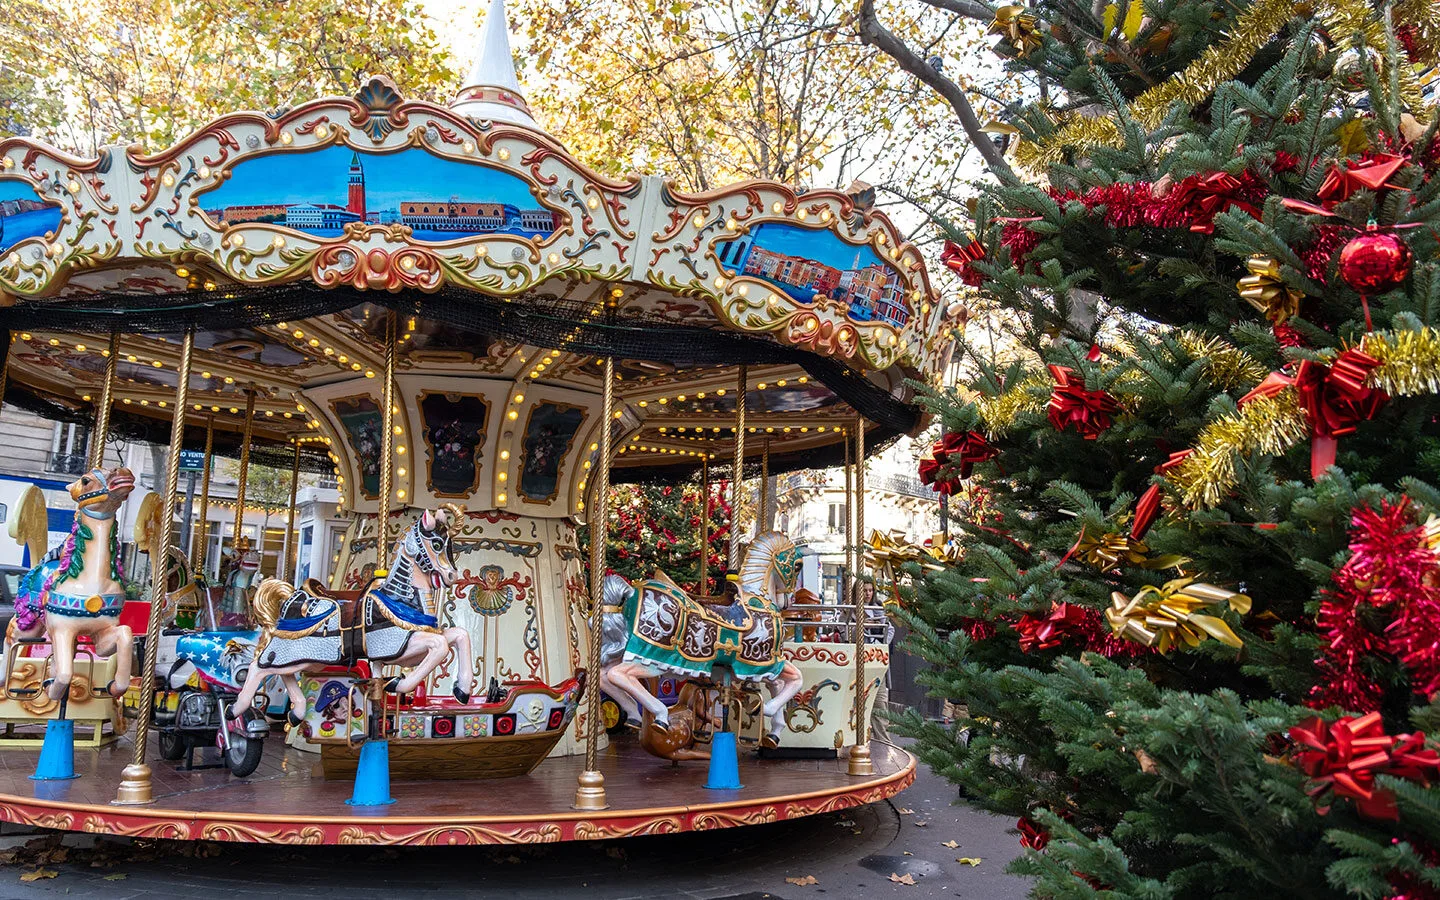 A Christmas carousel in Paris